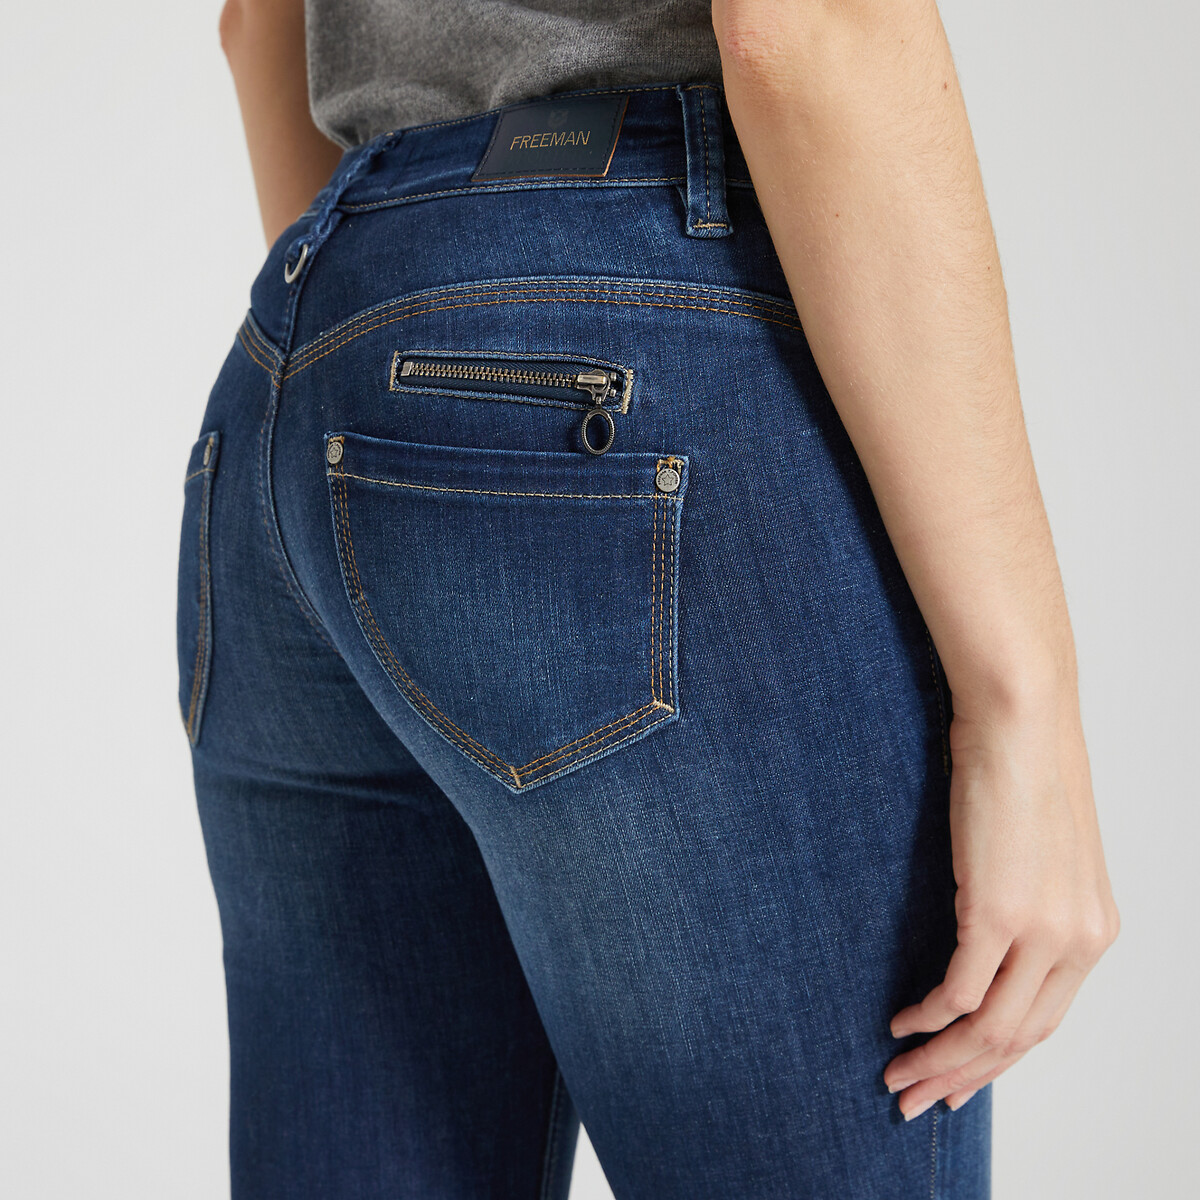 Alexa slim fit jeans, fever 32.5\